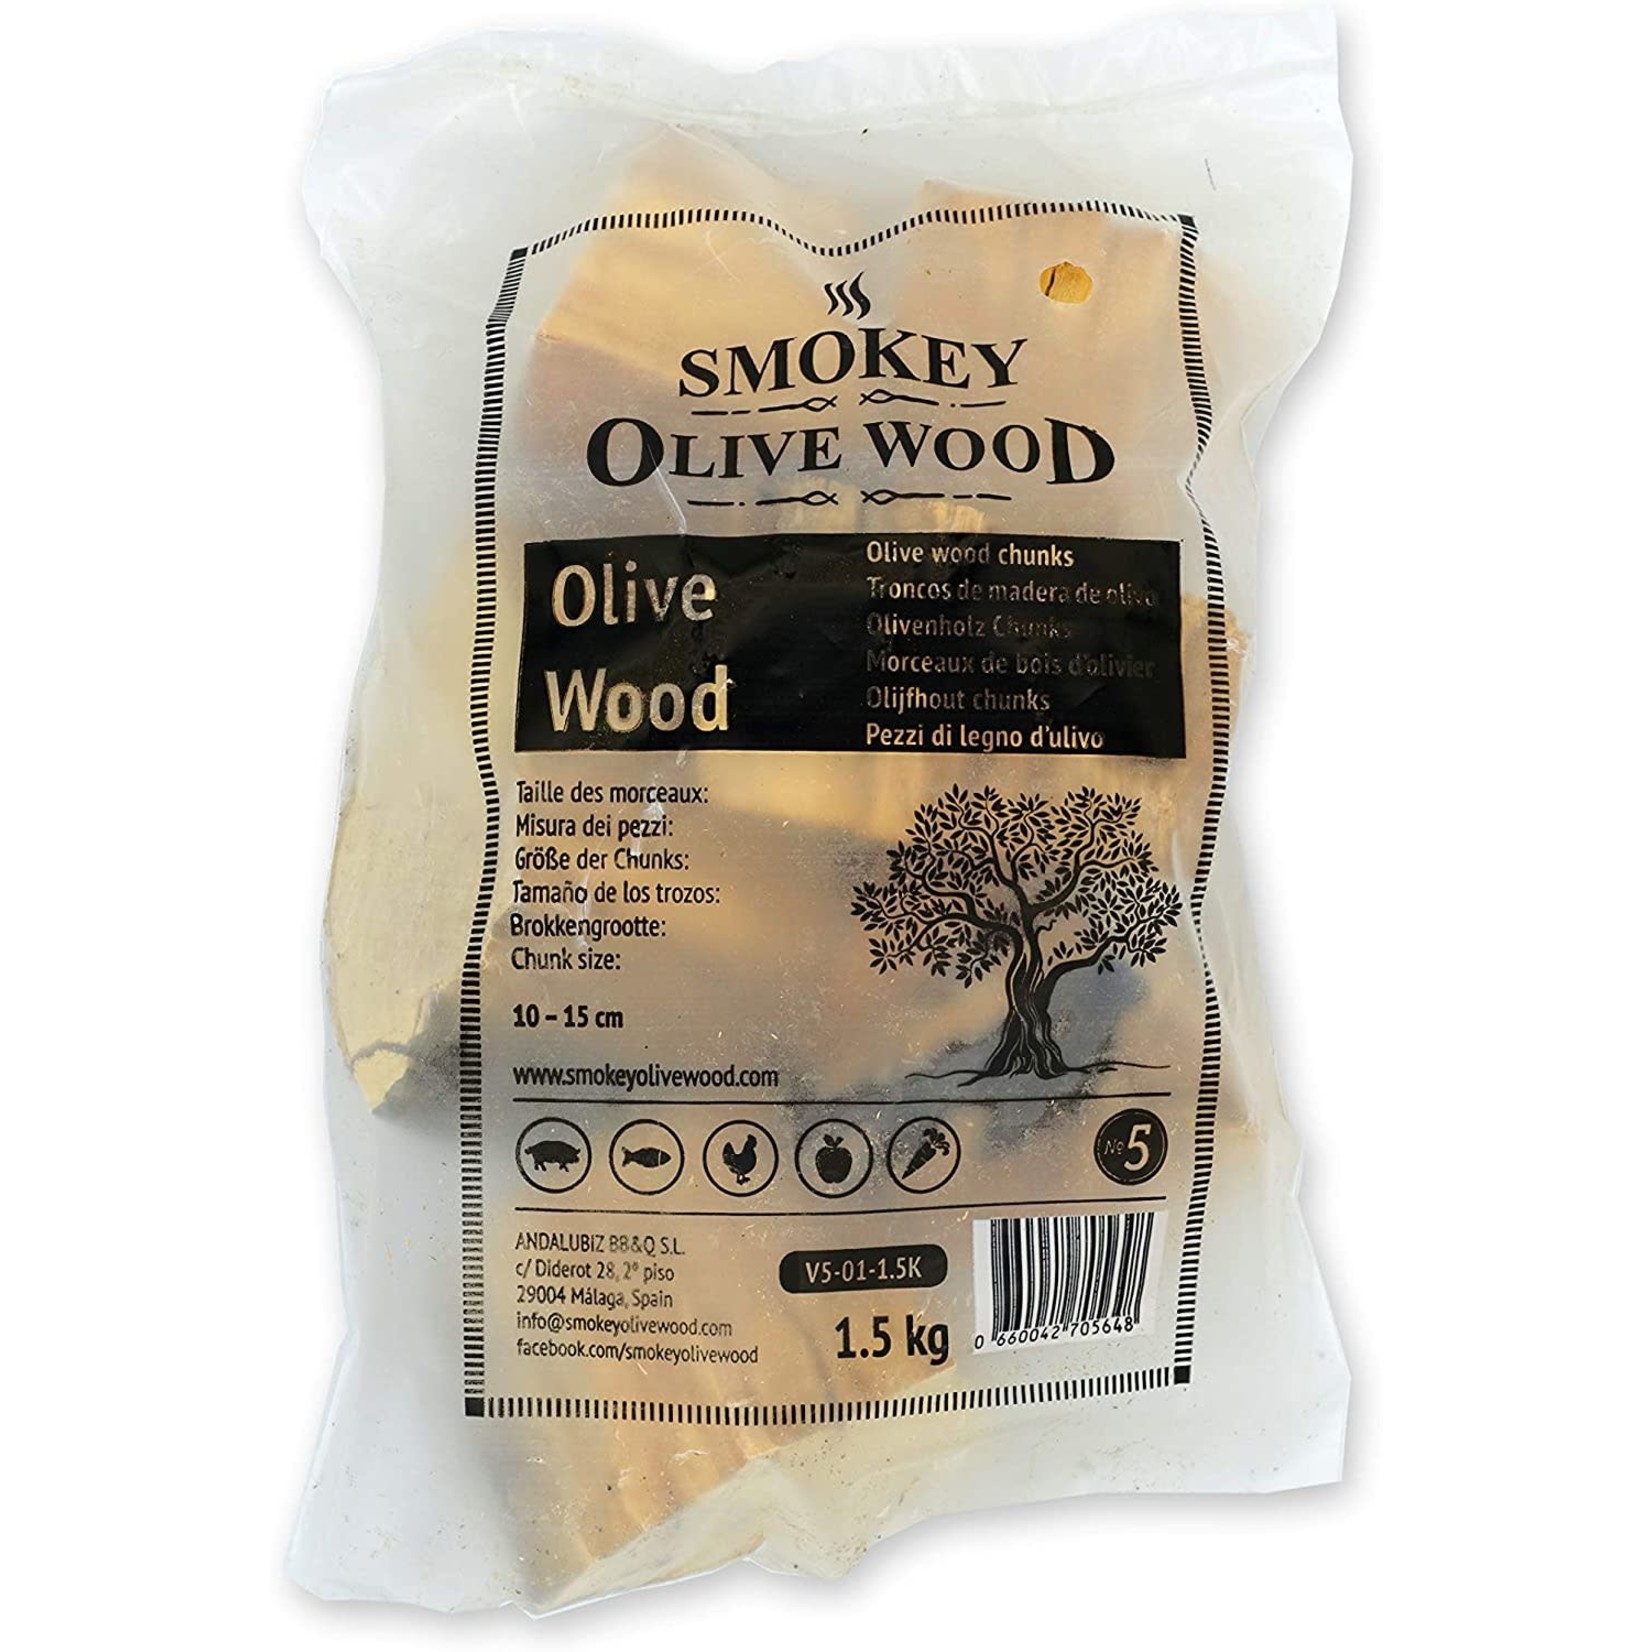 Smokey Olive Wood Olive Chunks #5 1.5kg